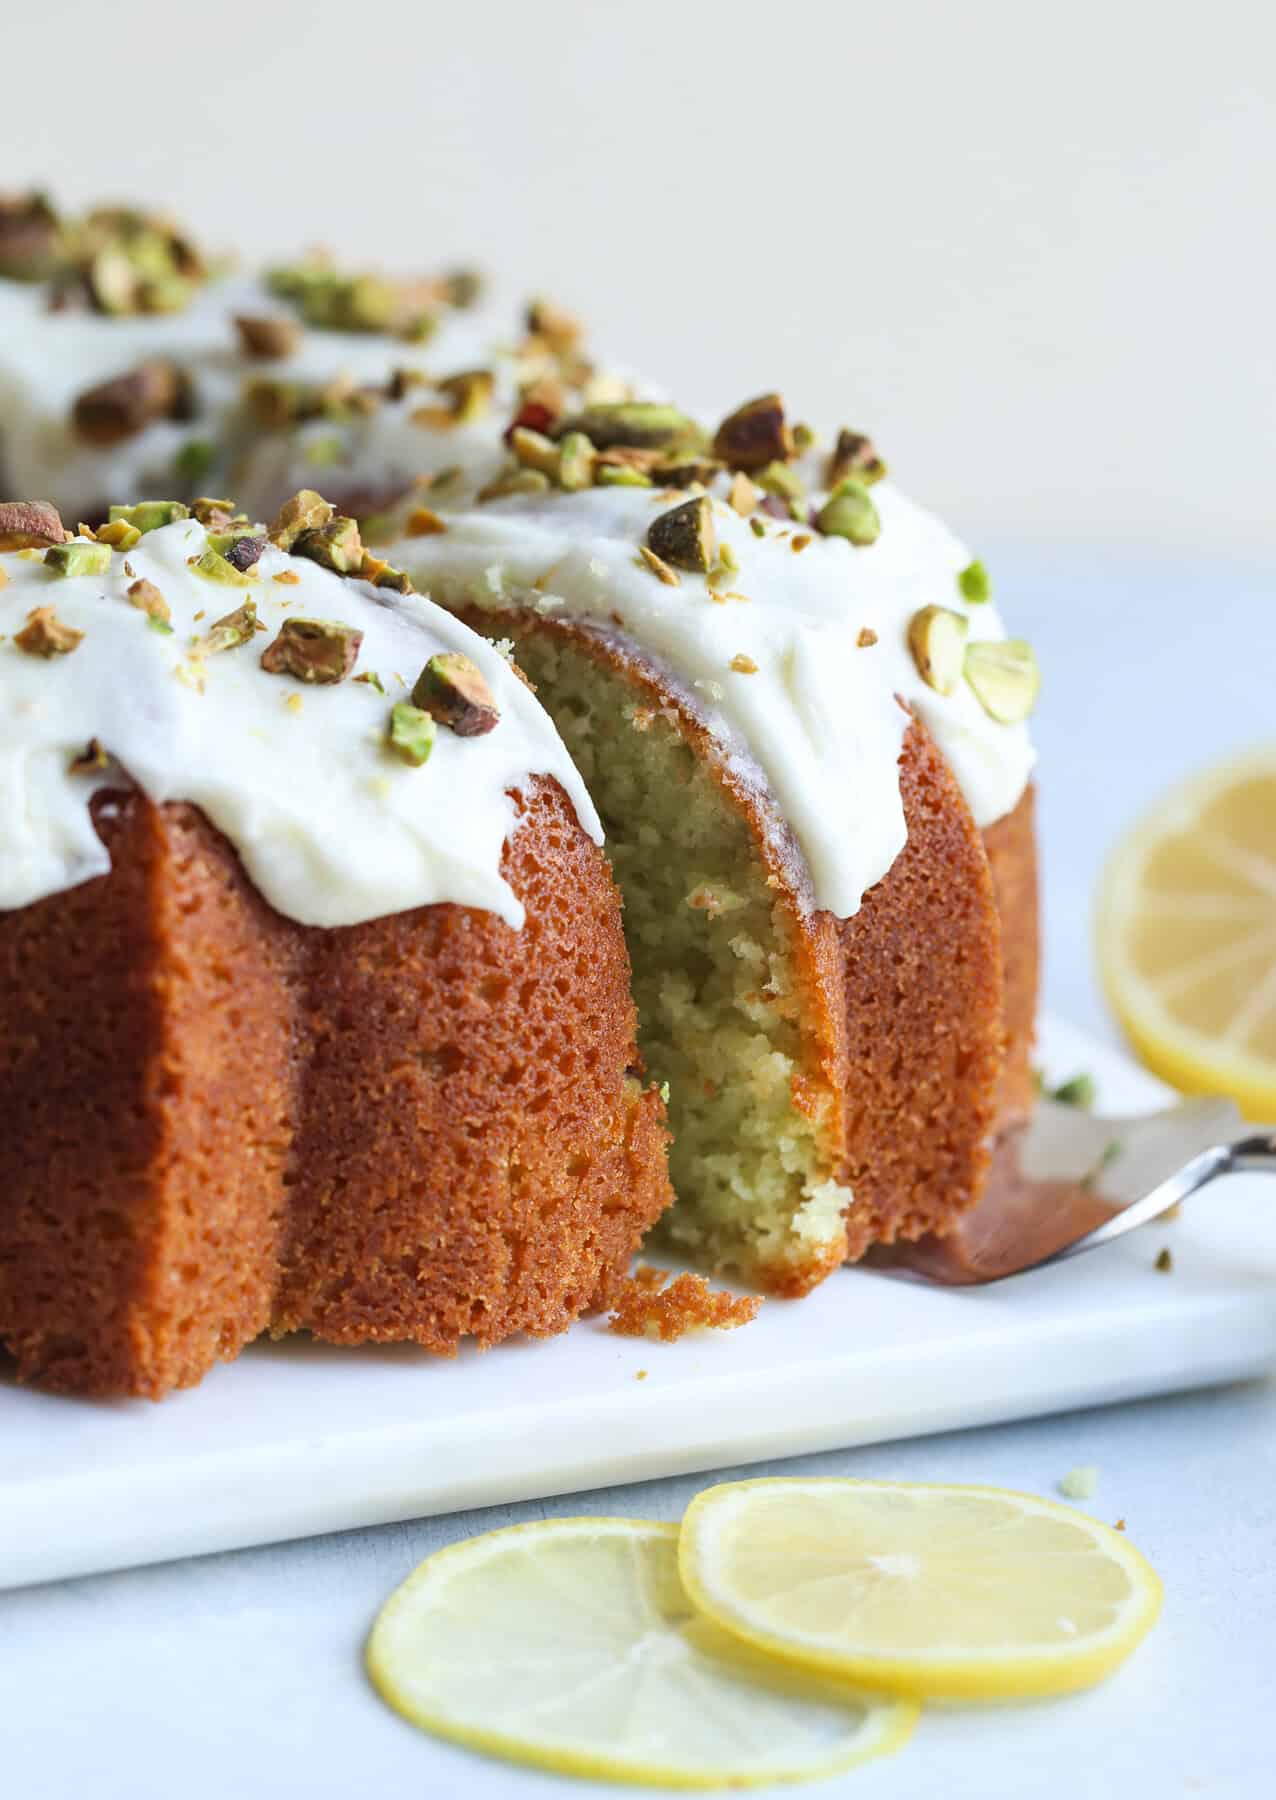 Pistachio Lemon Bundt Cake is an easy bundt cake recipe